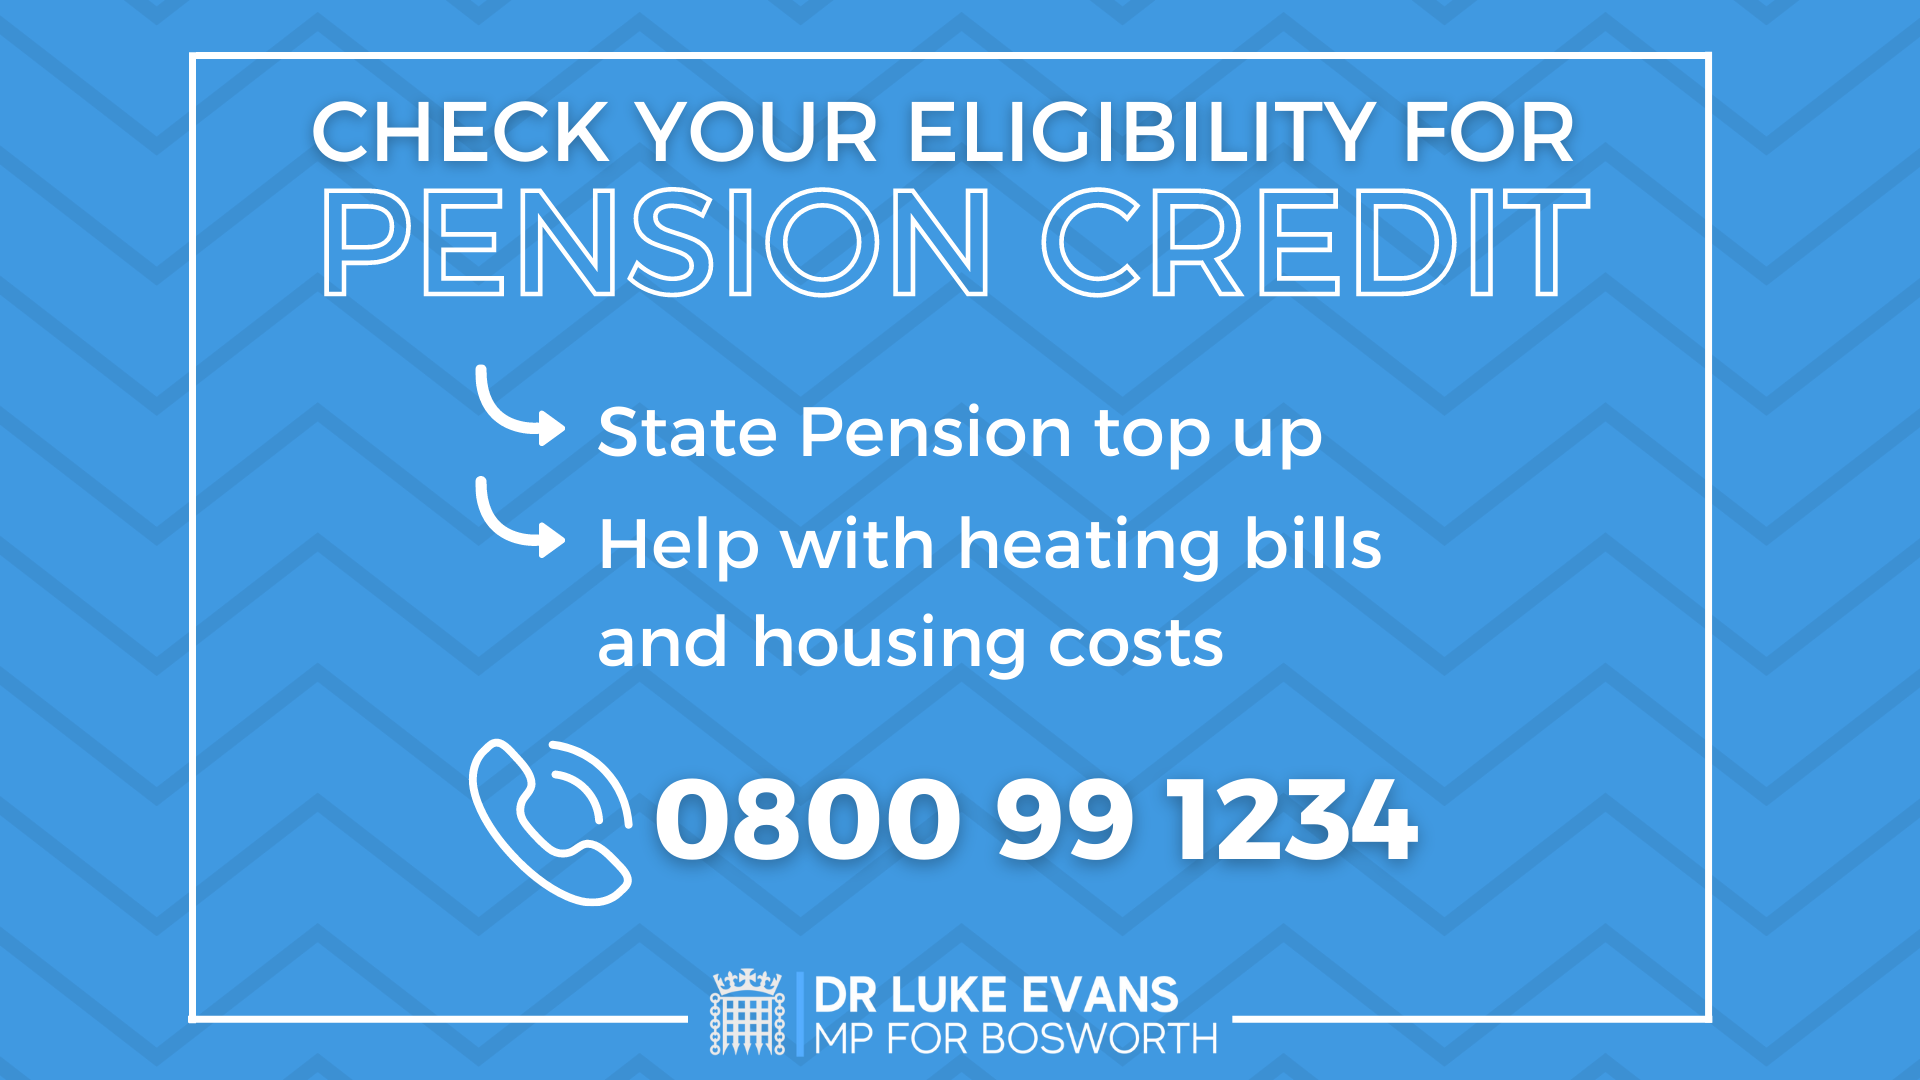 lektie skarp utålmodig Local MP welcomes campaign to boost take up of Pension Credit in Bosworth |  Dr Luke Evans MP